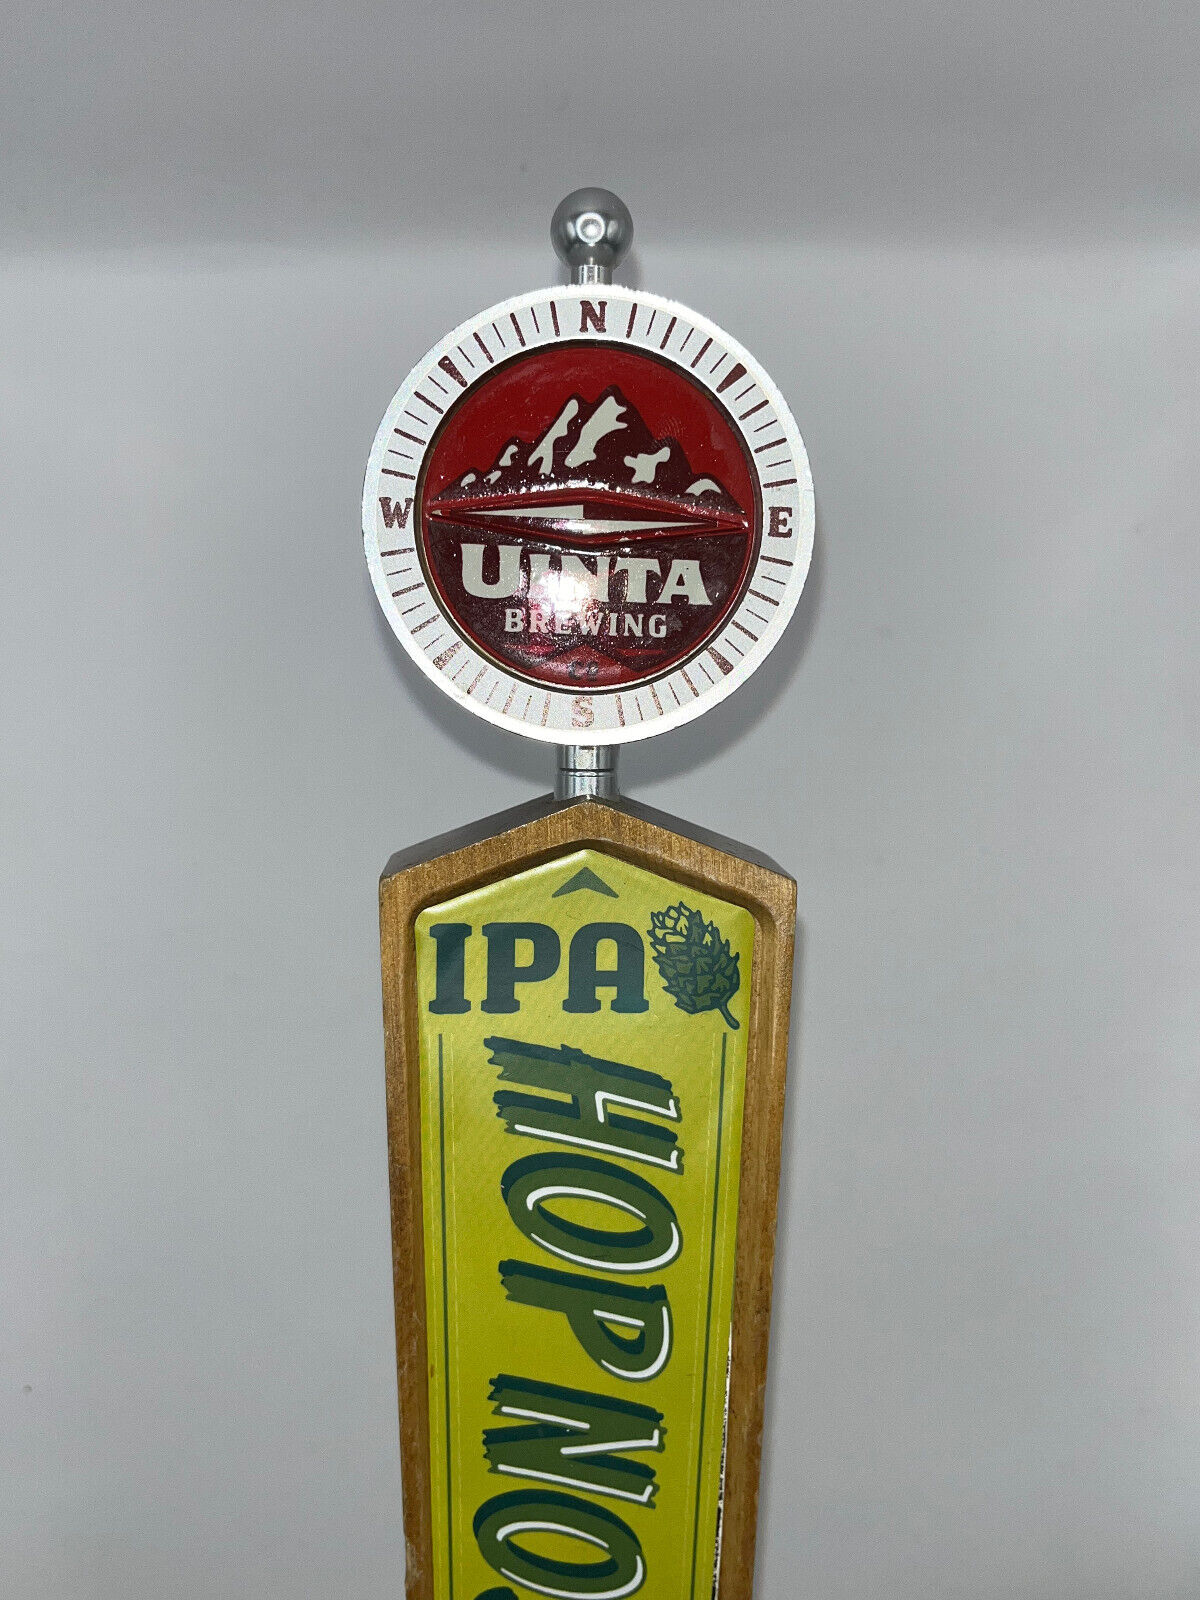 UINTA Brewing Hop Nosh IPA Salt Lake City Utah SLC Beer Tap Handle Kegerator